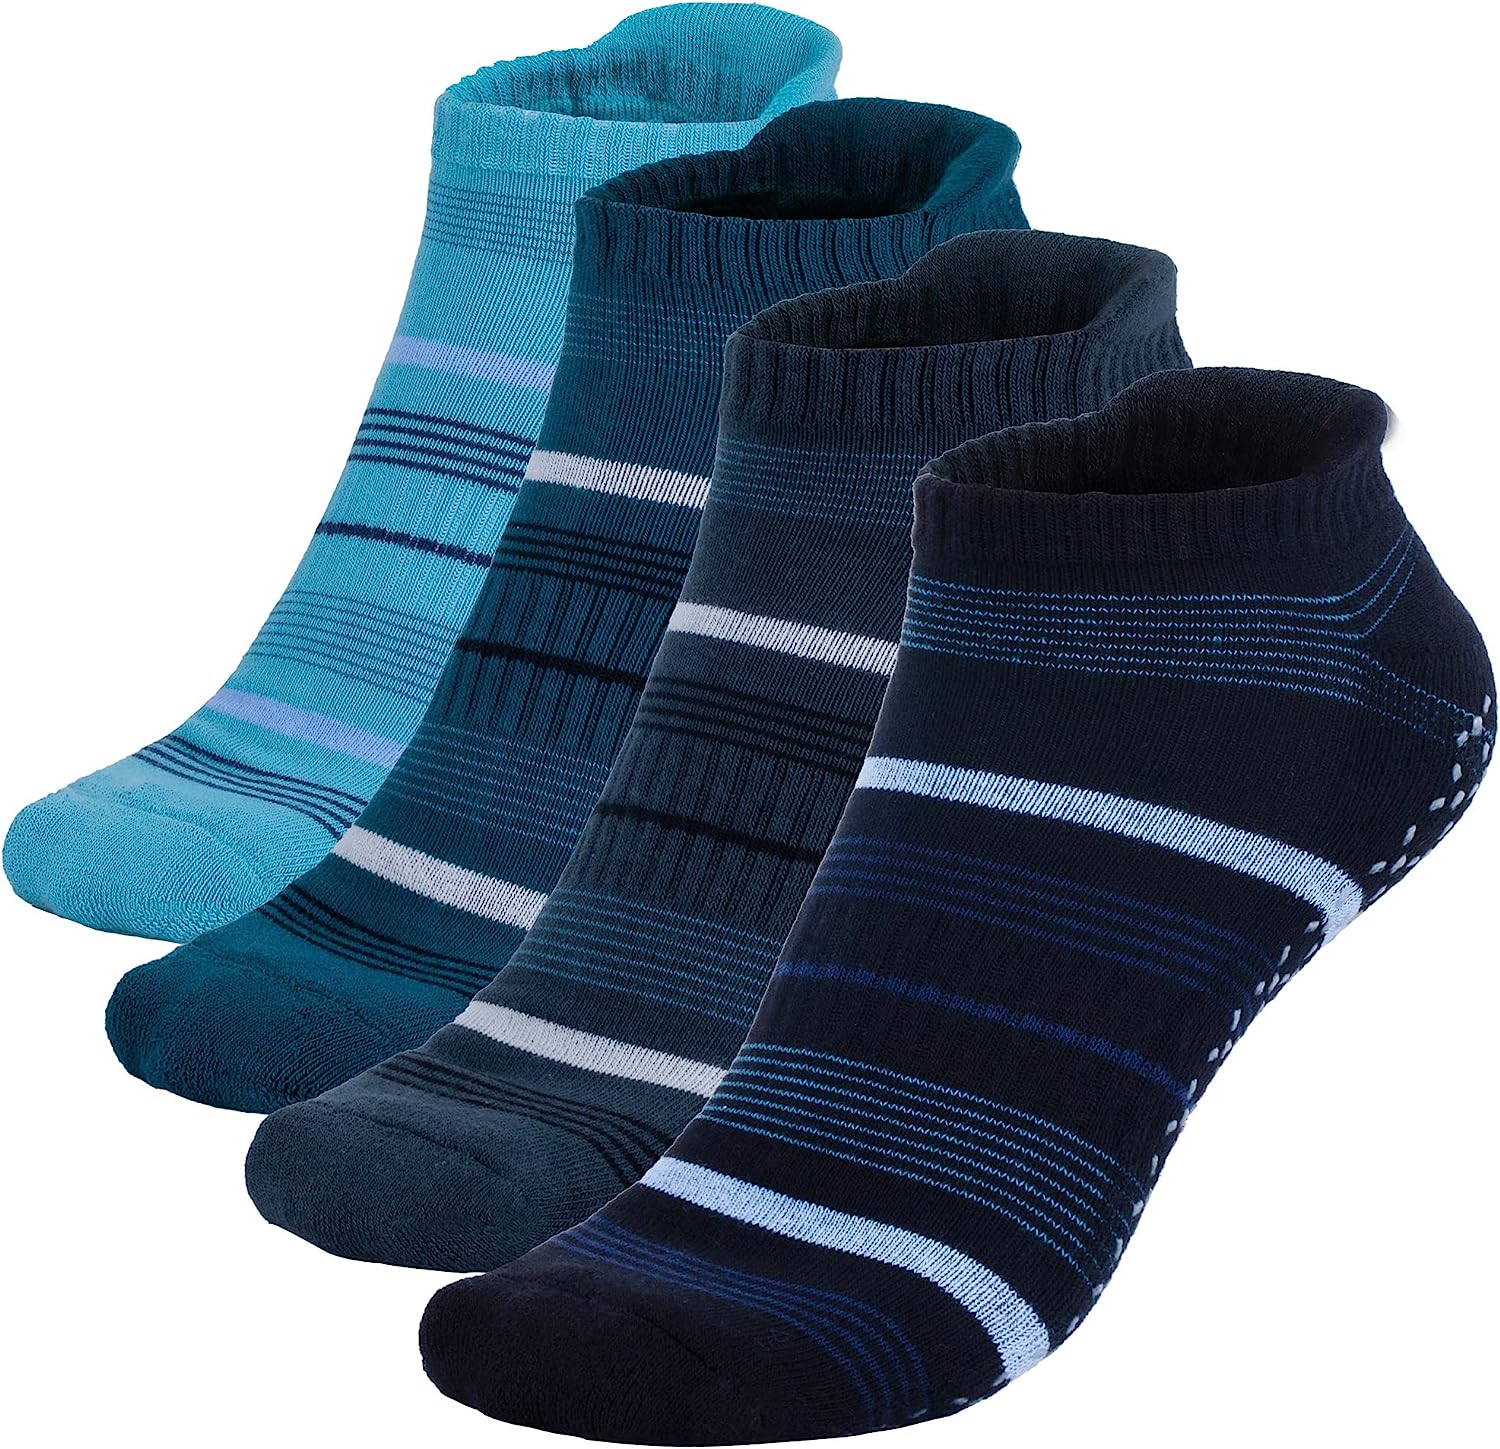 unenow Unisex Non Slip grip Socks with cushion for Yoga, Pilates